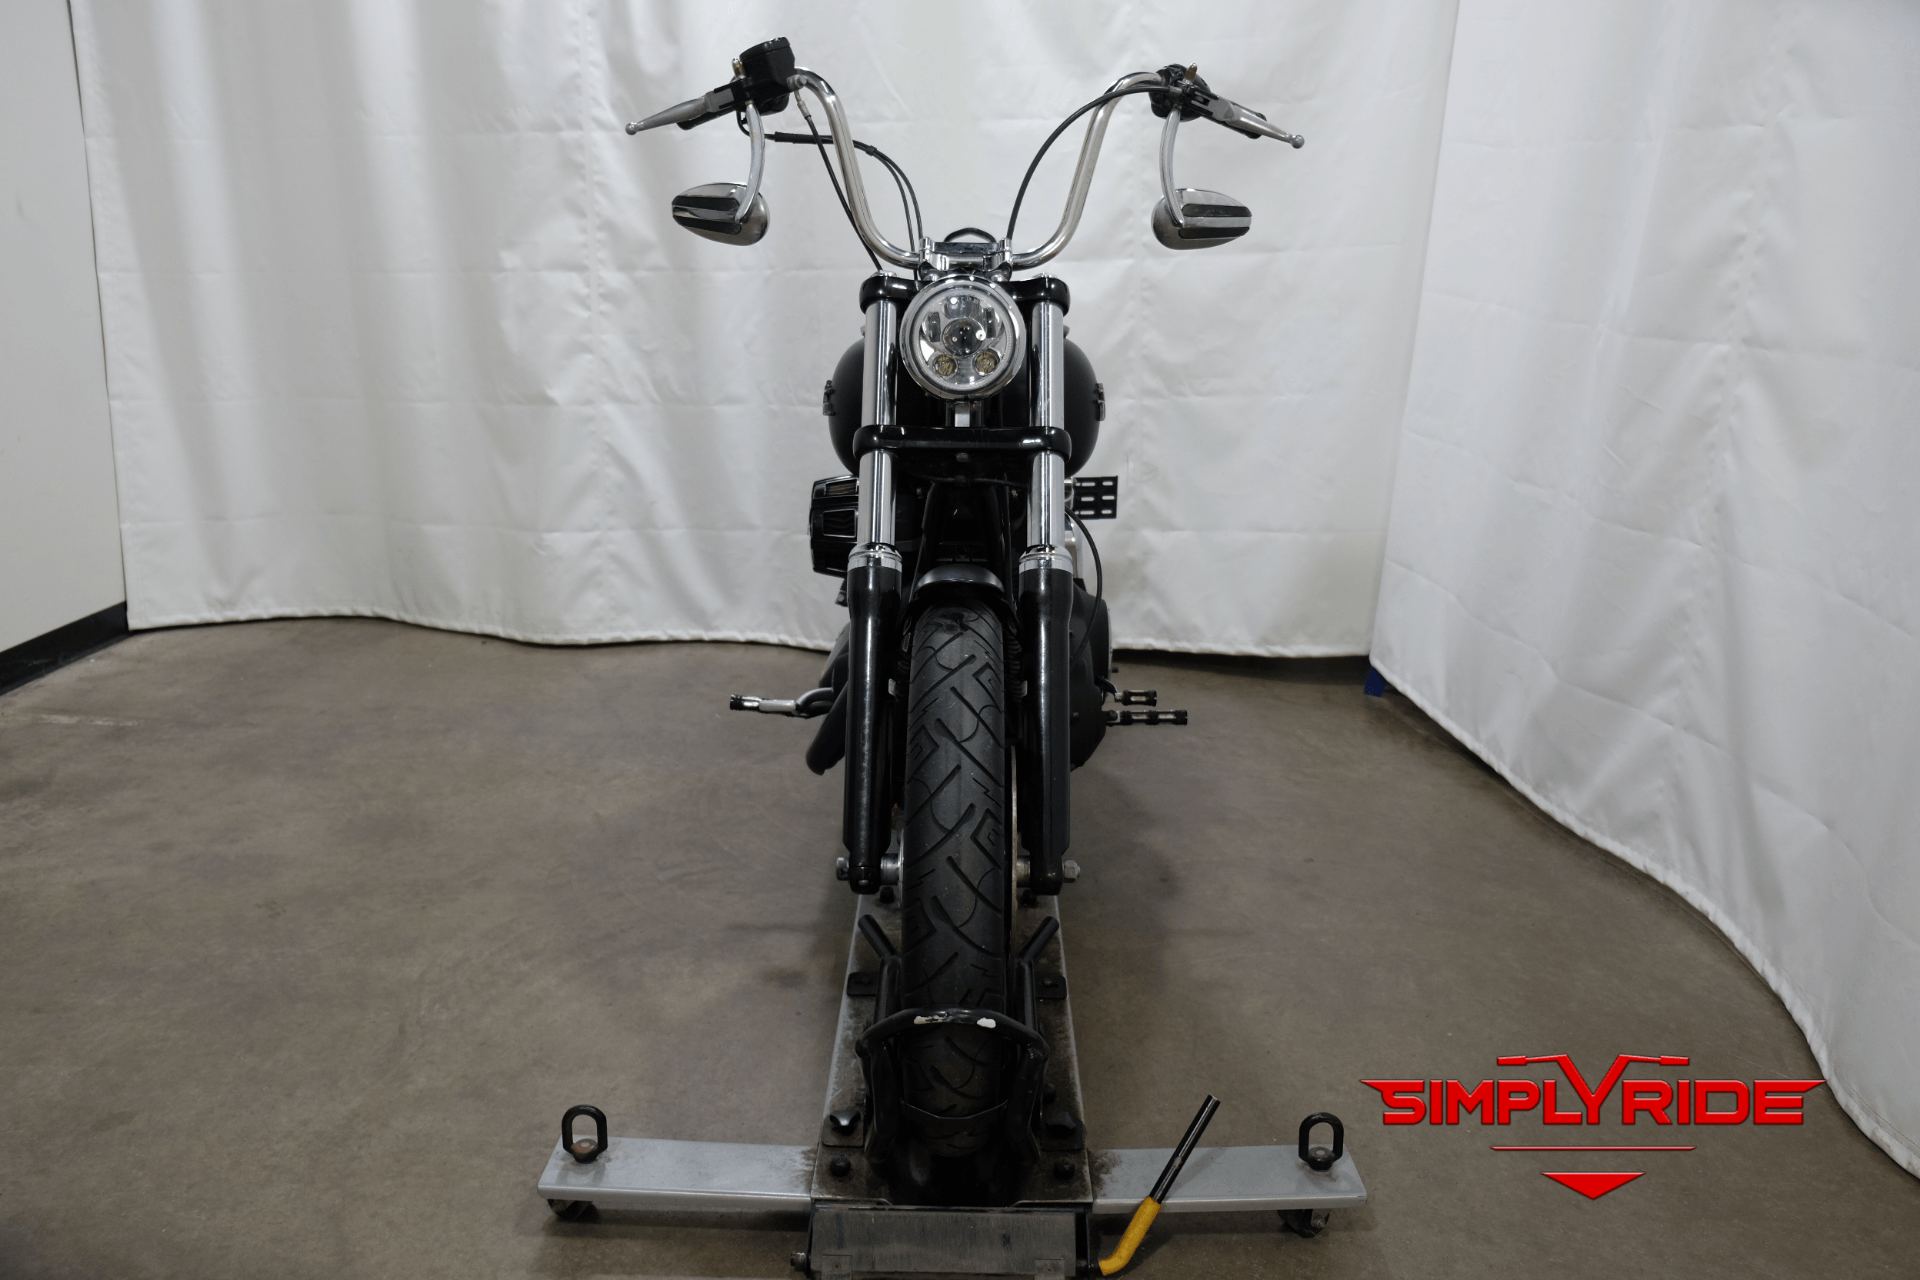 2015 Harley-Davidson Street Bob® in Eden Prairie, Minnesota - Photo 3